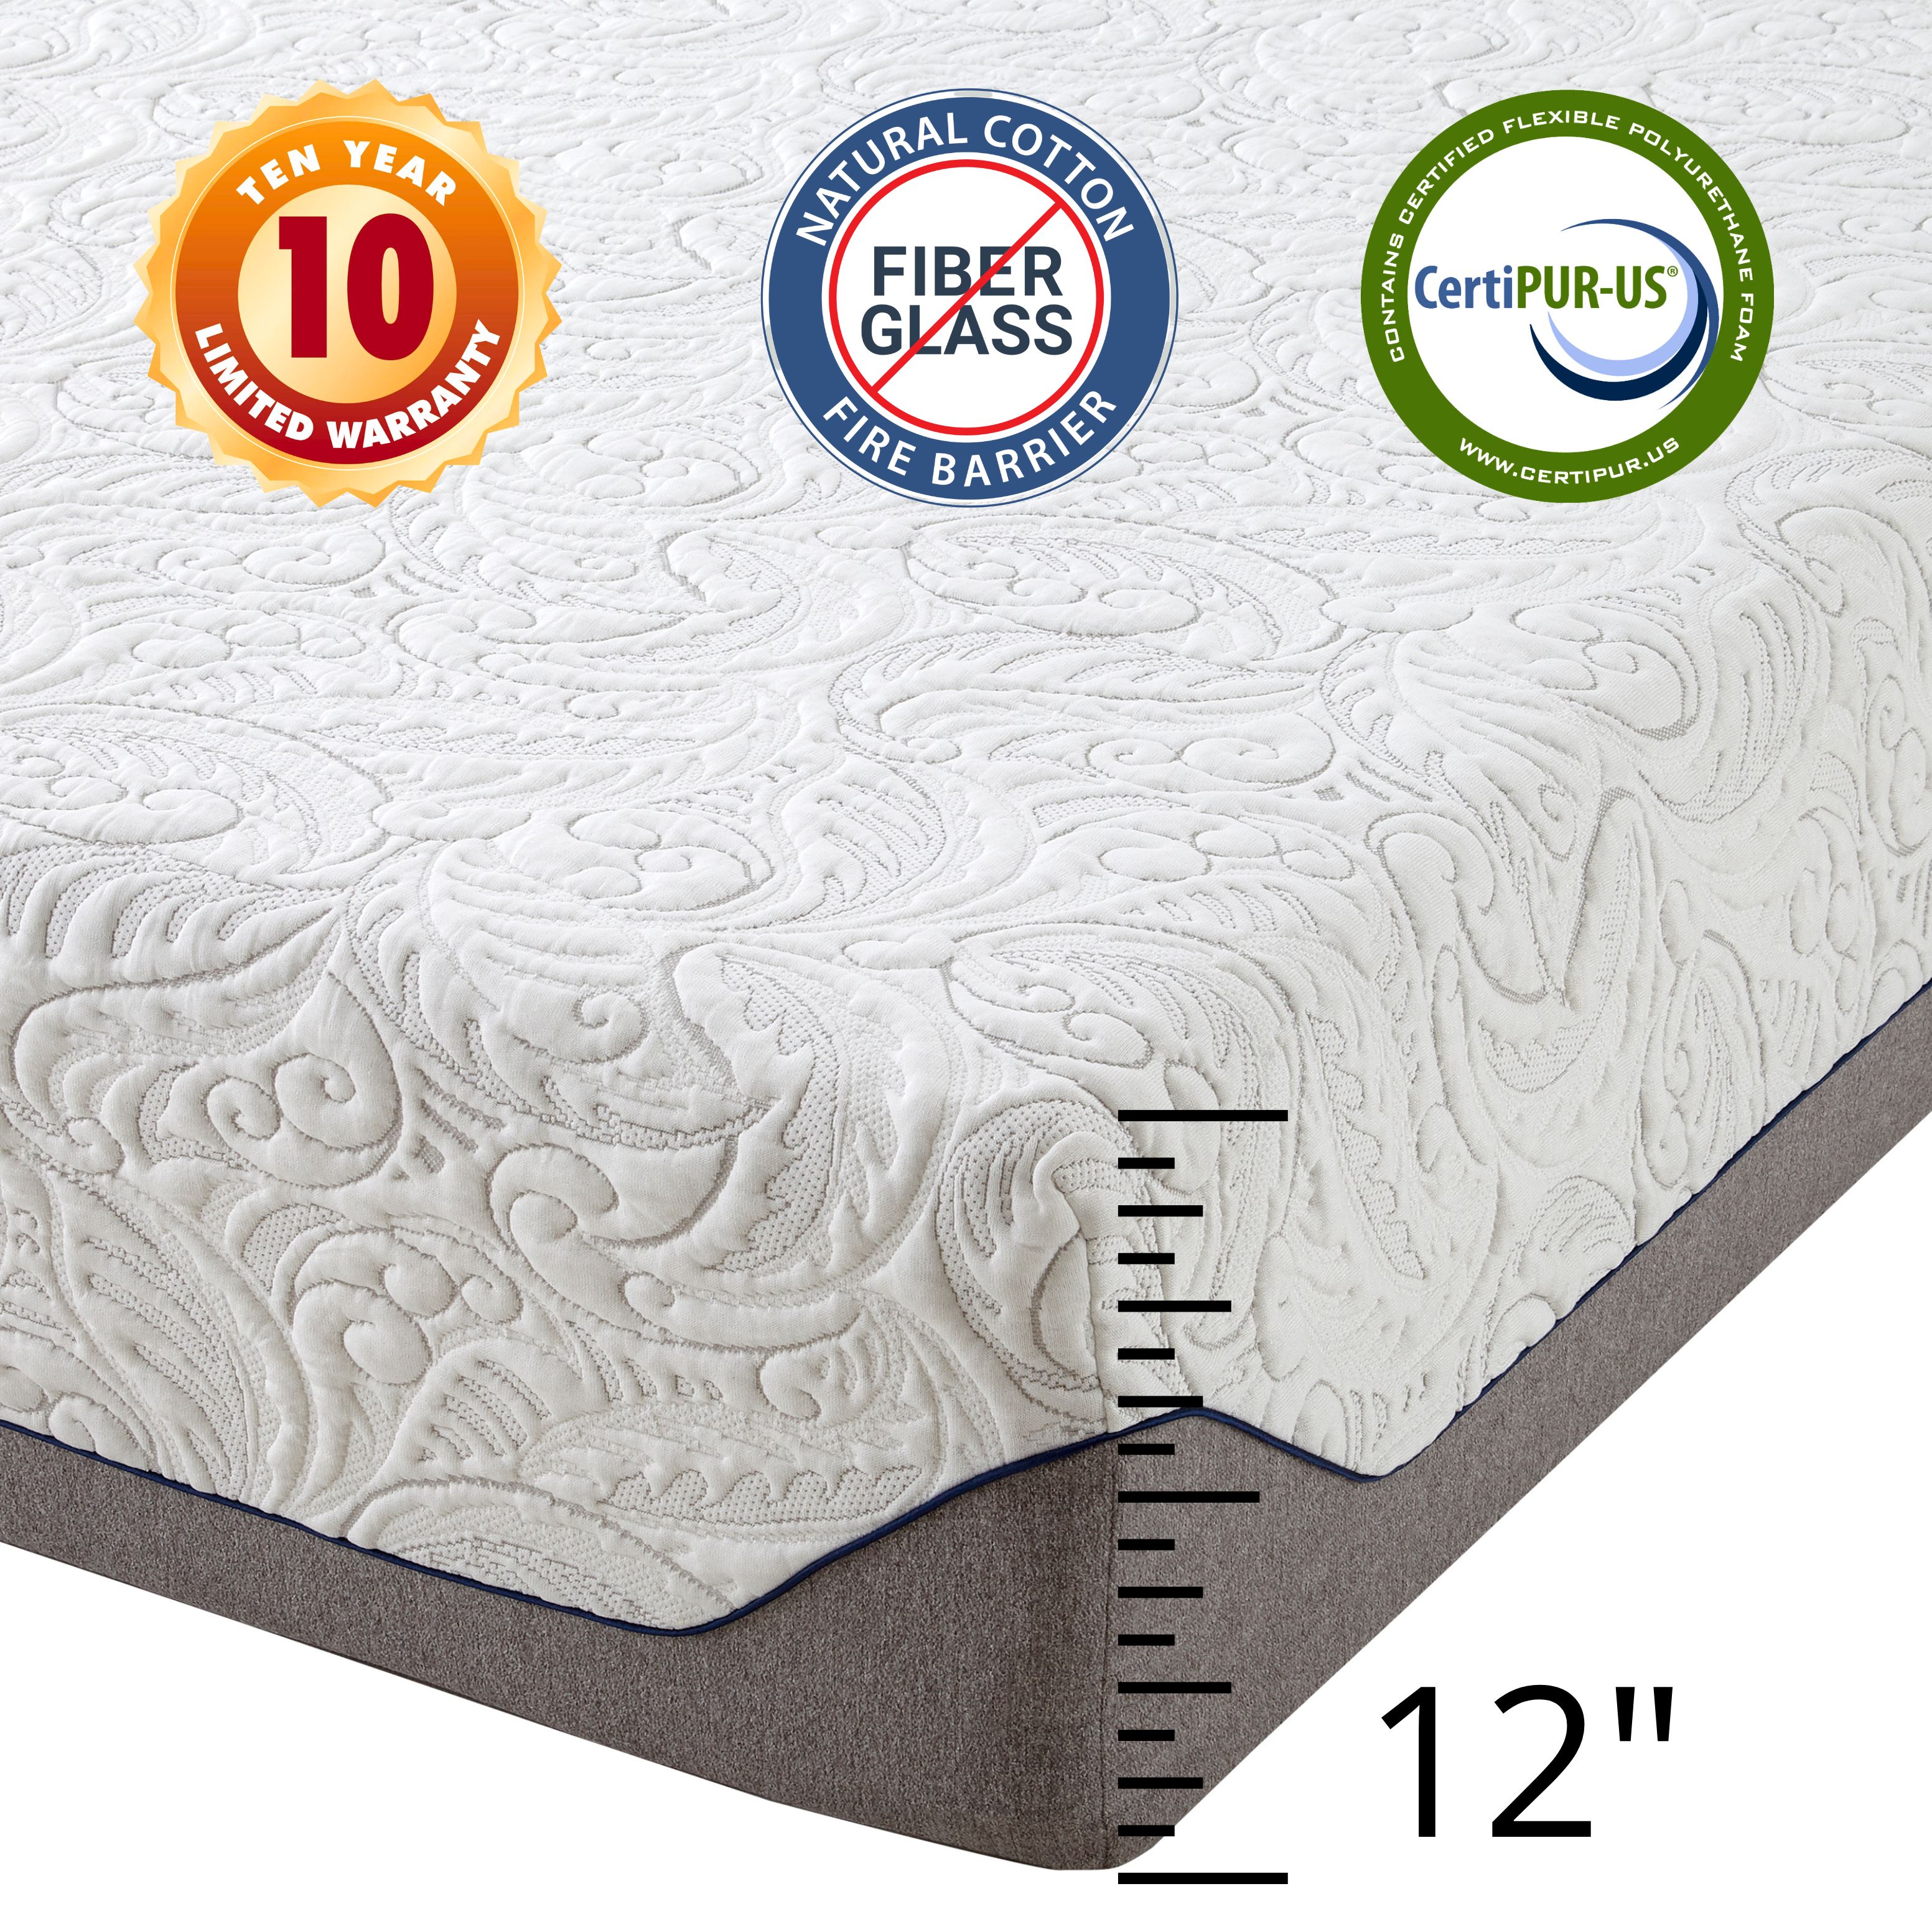 Boyd Sleep Air Flow 12" Gel Memory Foam Mattress, Medium Firm, Adult, Twin with Zip-off Cover - image 4 of 14